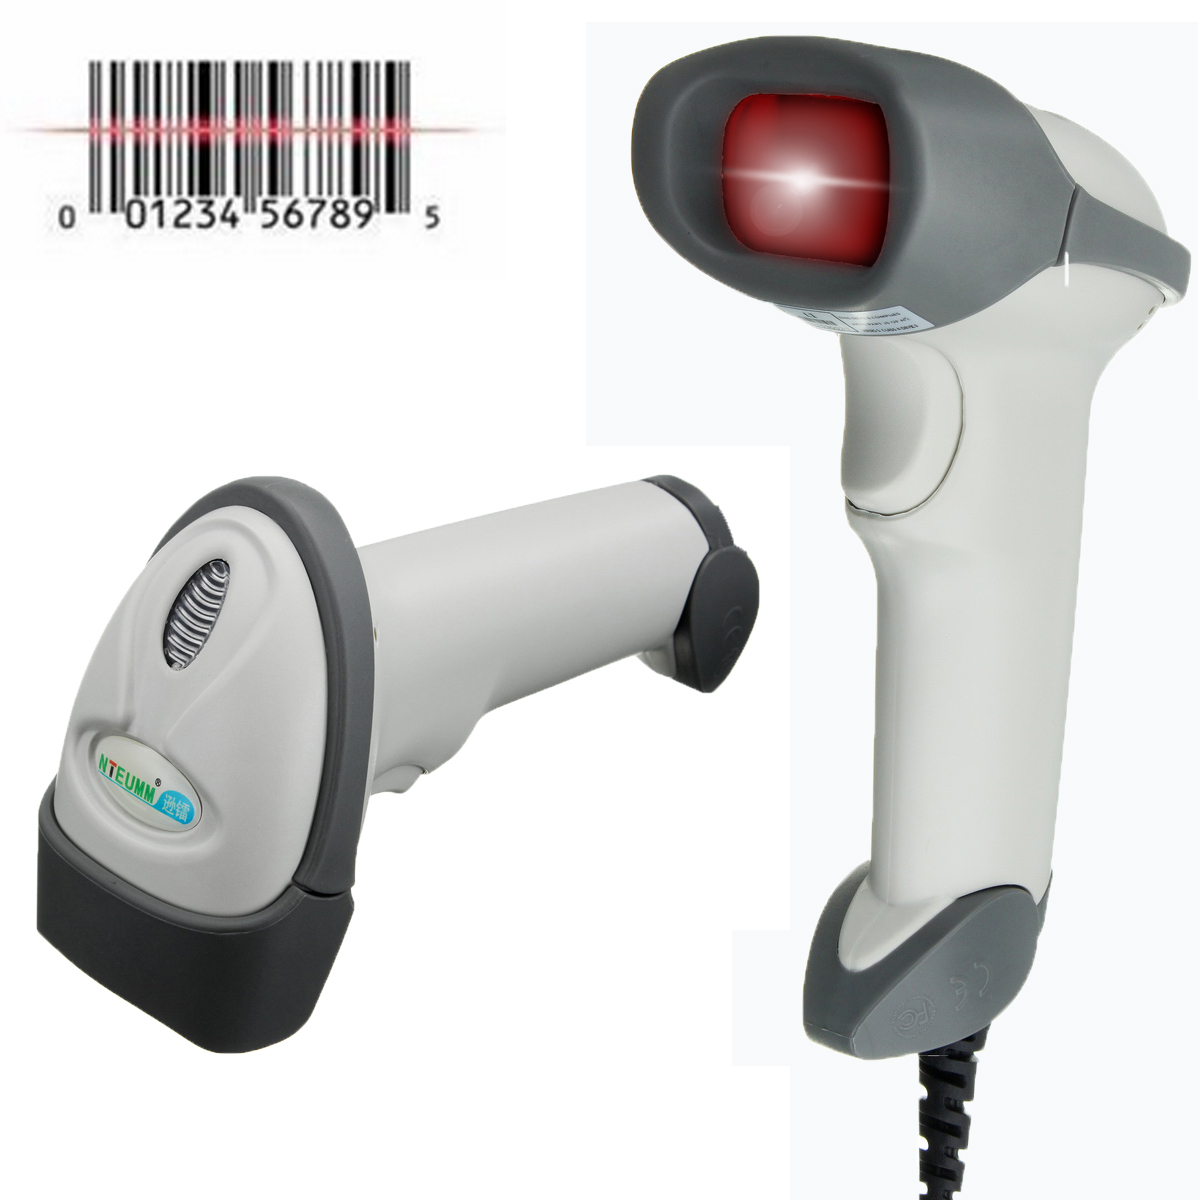 

Wired Laser Barcode Bar Code Scanner Handheld Reader Decoder & USB Cable For POS